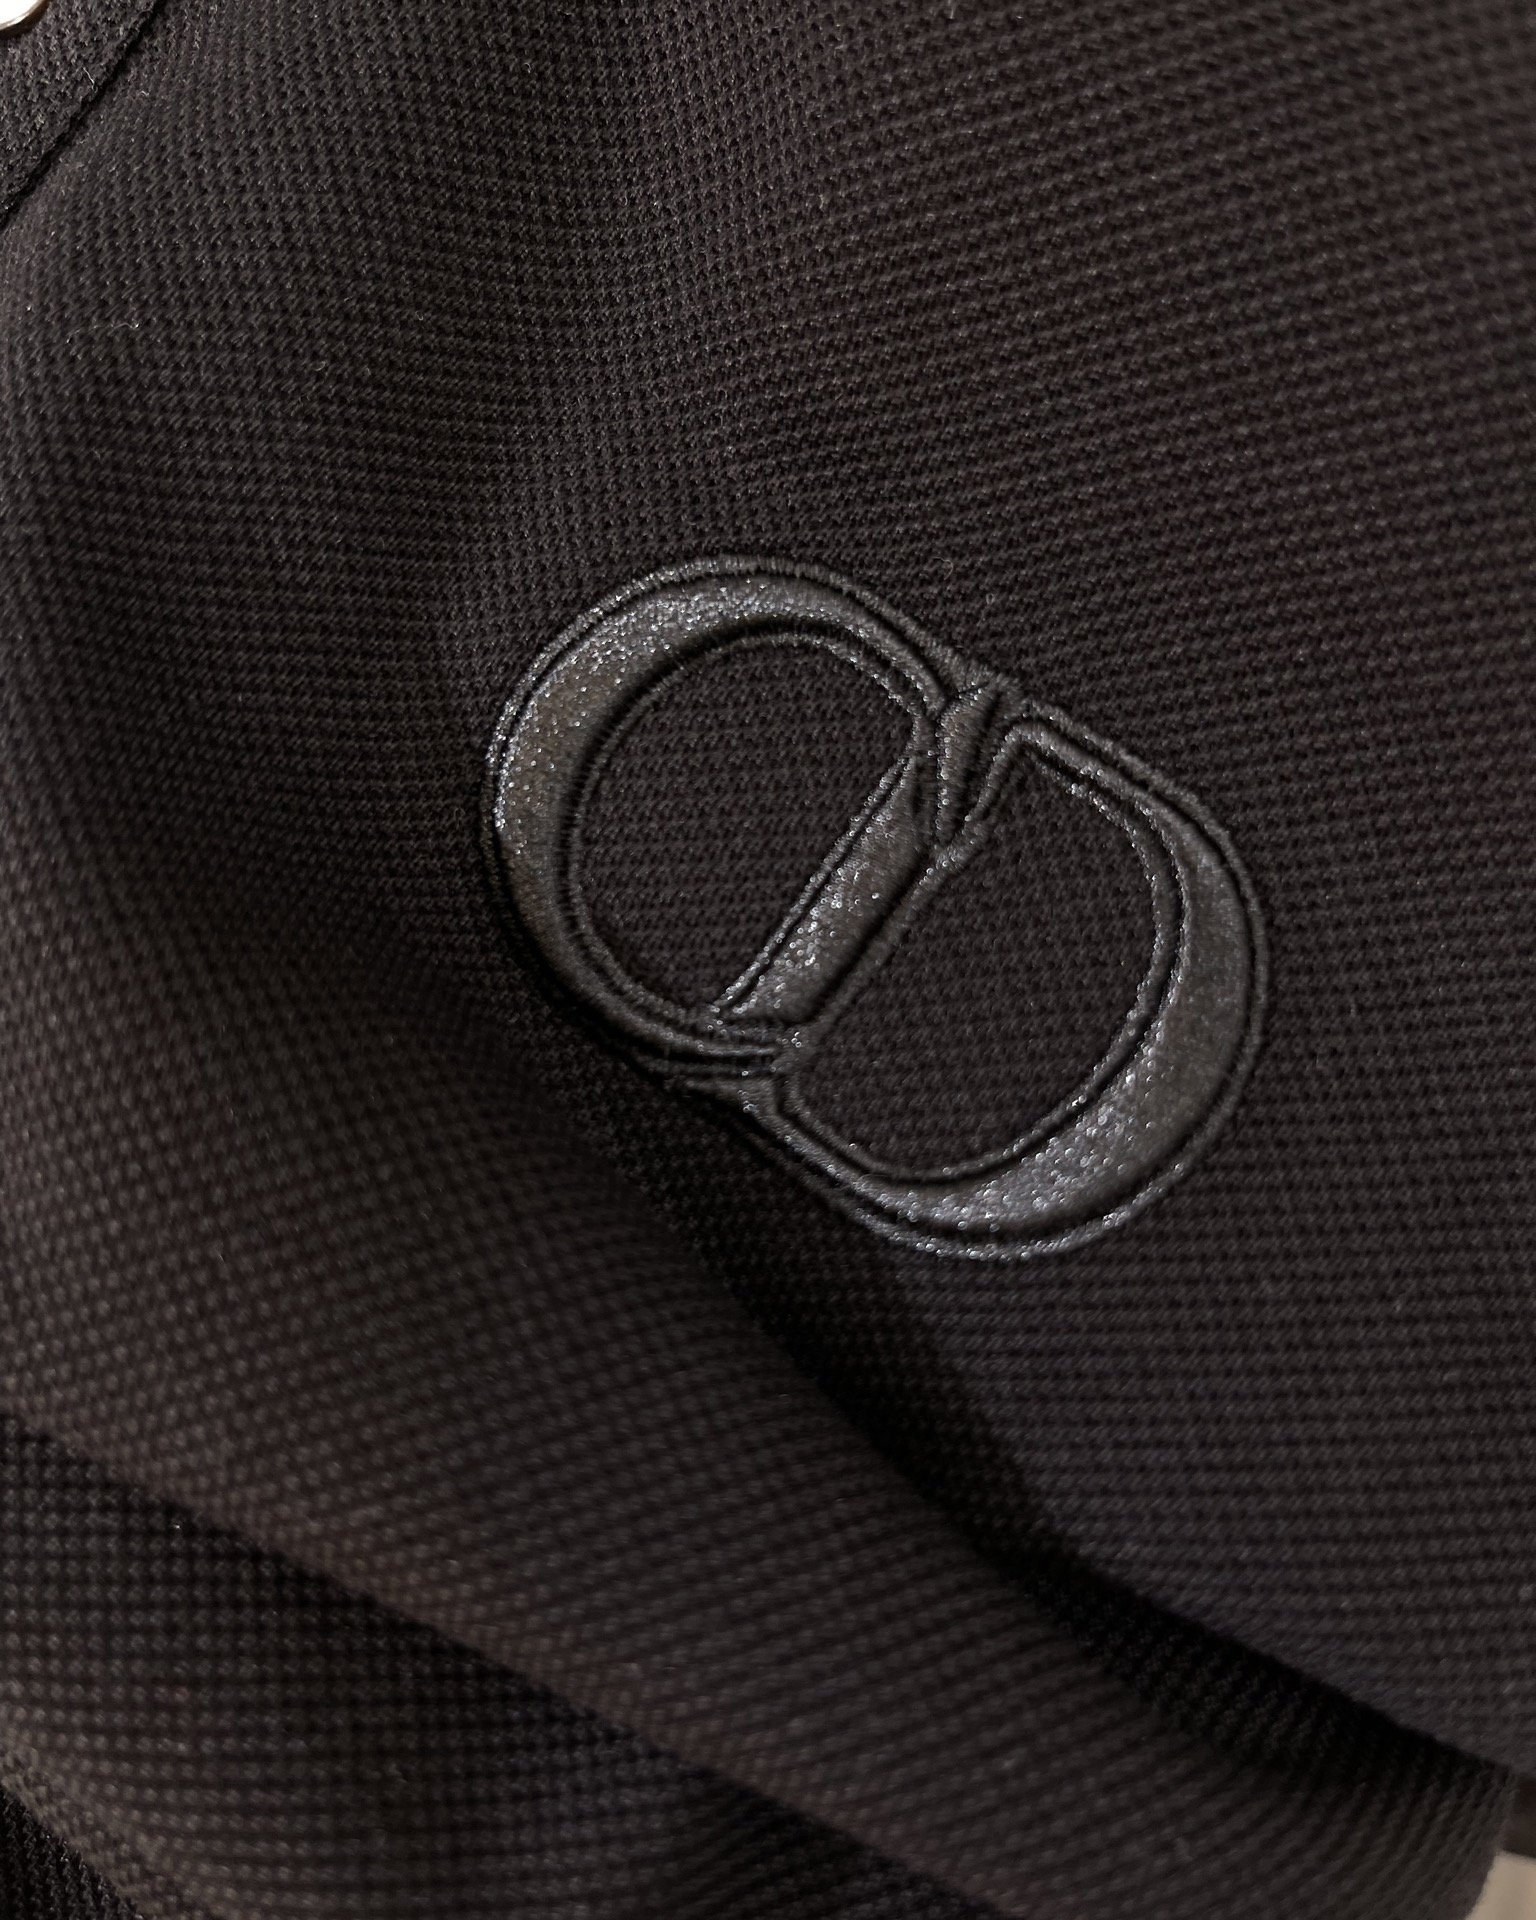 Dior迪奥款式男款短袖翻领短袖Polo马球T恤衫T-shirt经典标志性Logo简约大气时尚百搭品相更